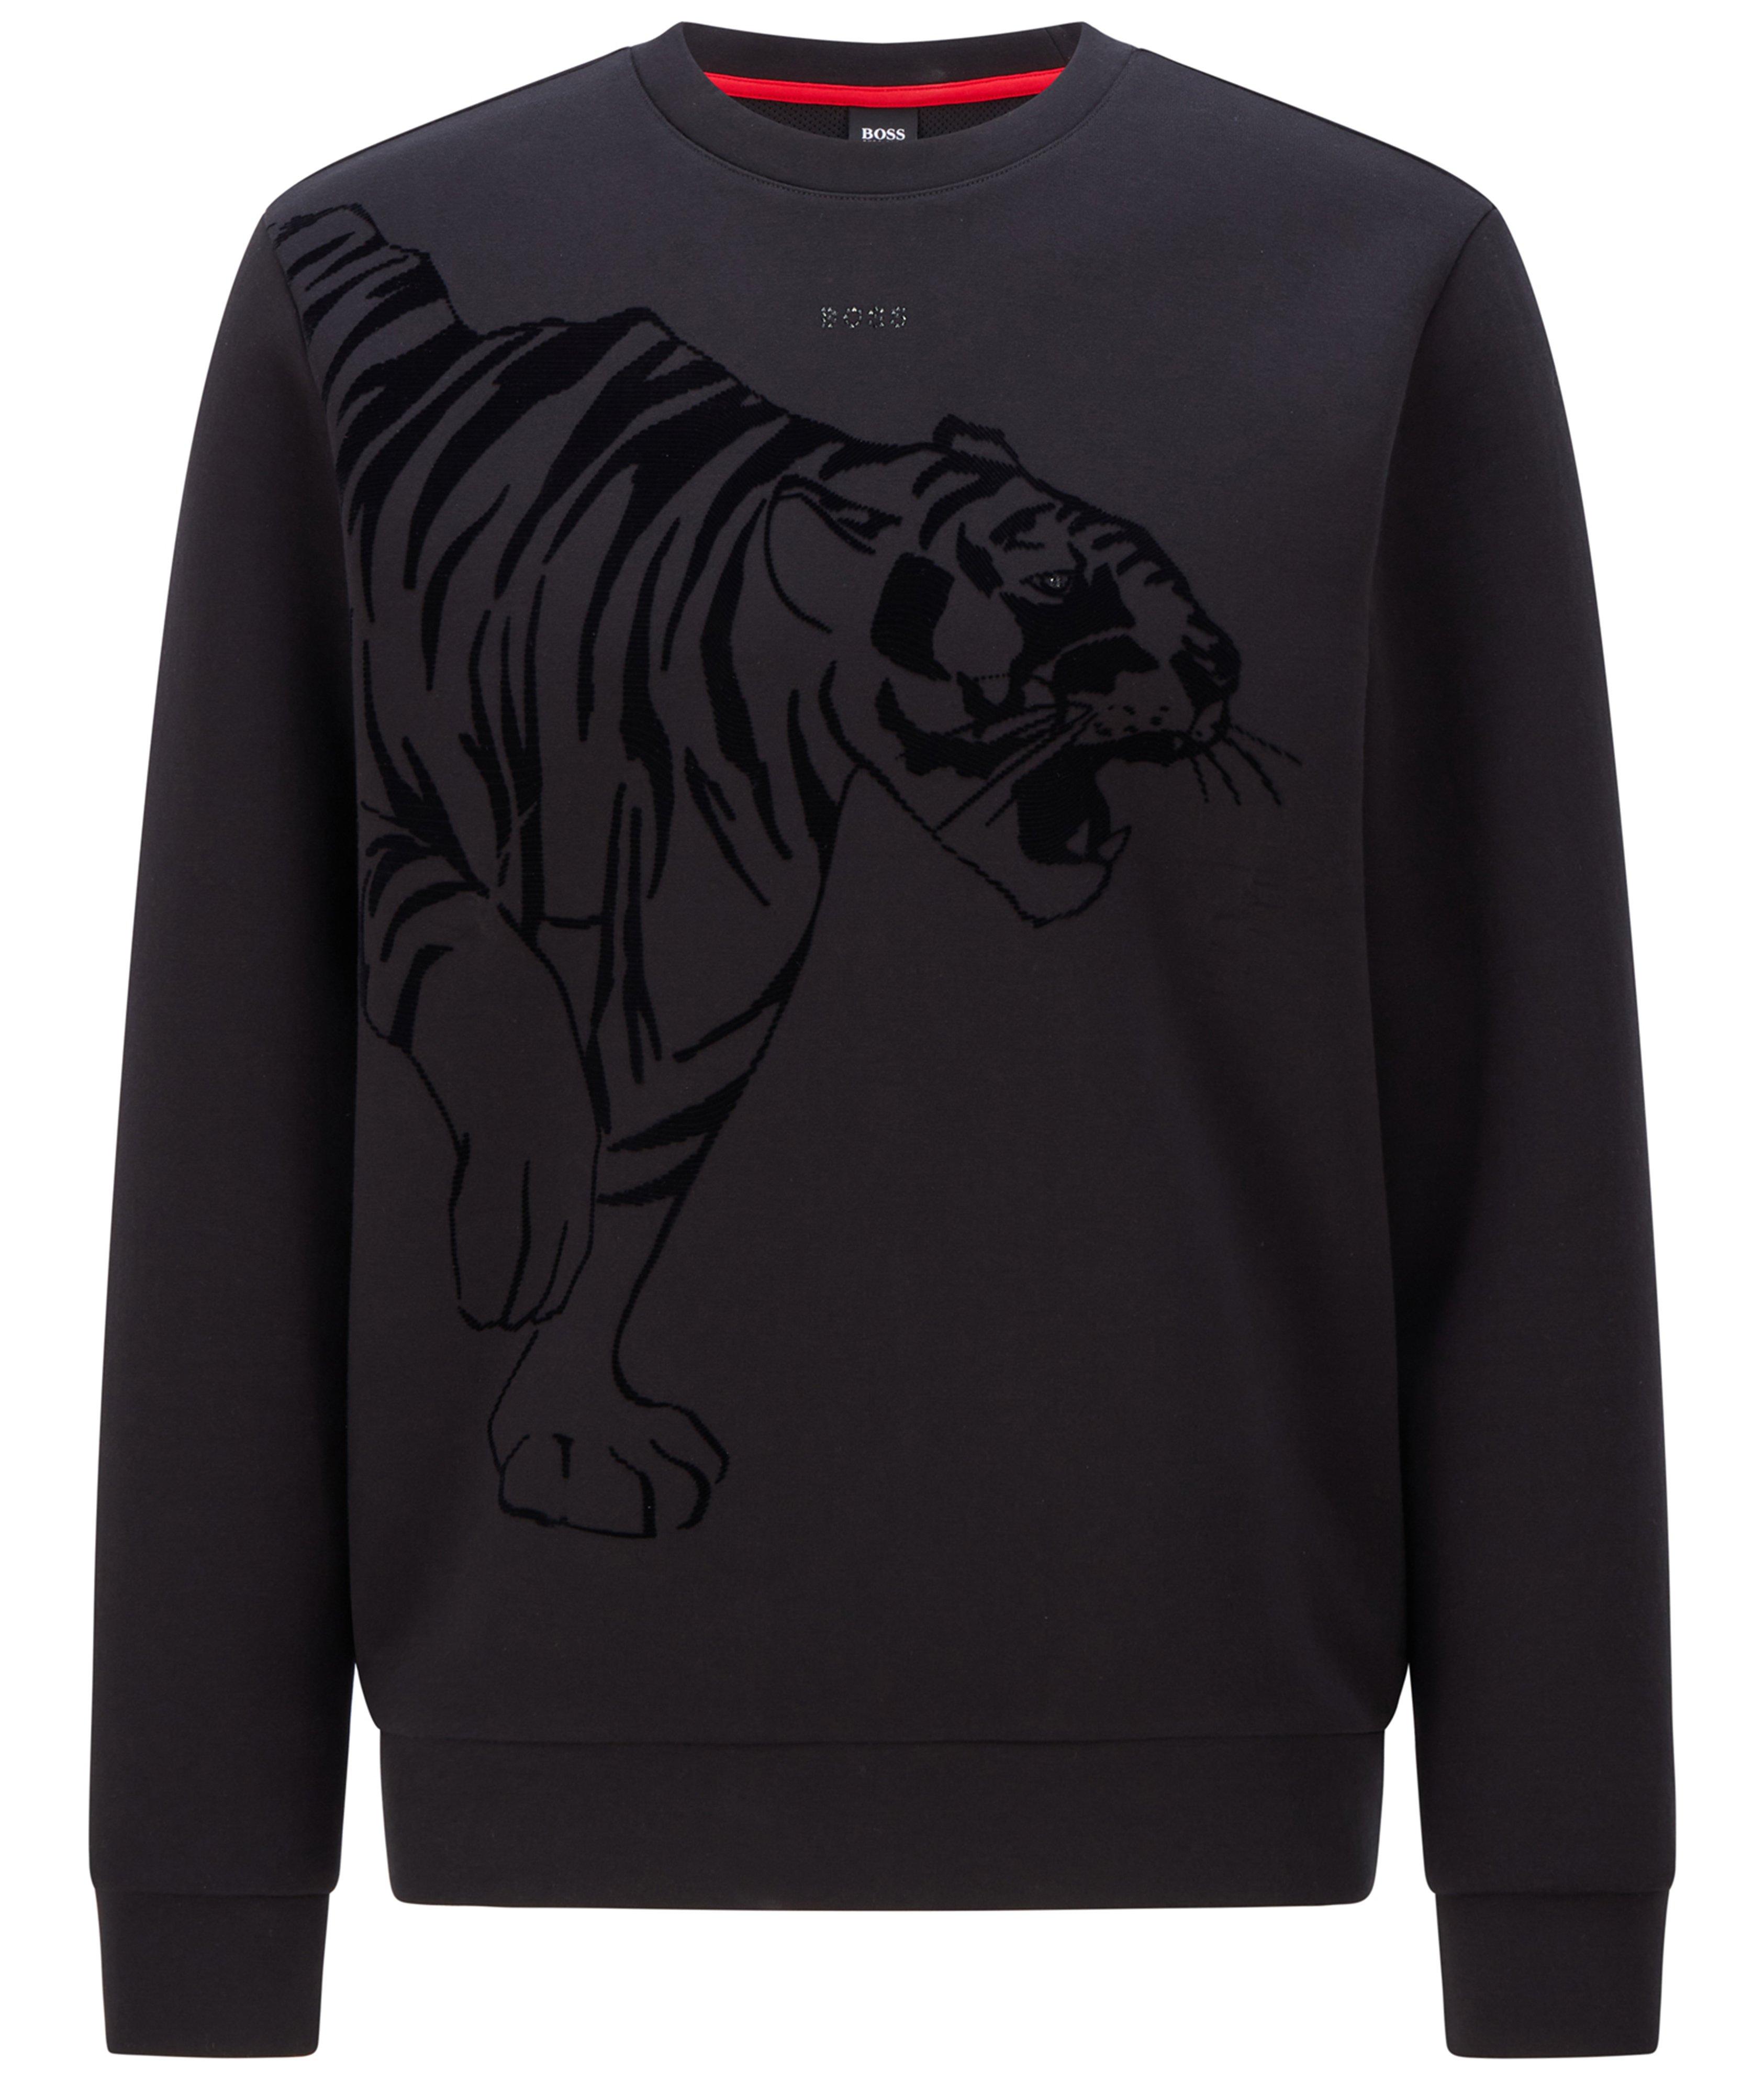 Rhinestone Tiger Cotton-Blend Sweatshirt image 0